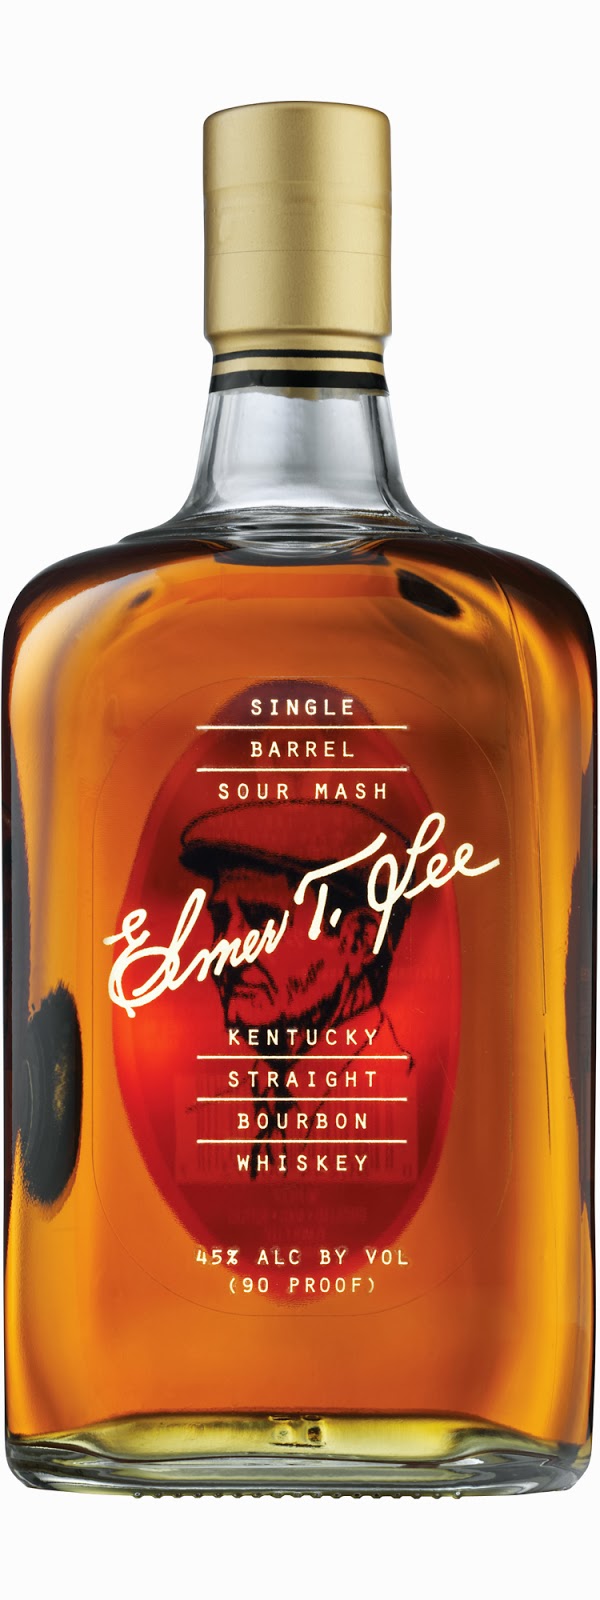 Elmer T Lee Bourbon, Single Barrel Sour Mash 45% abv 750ml (2017)